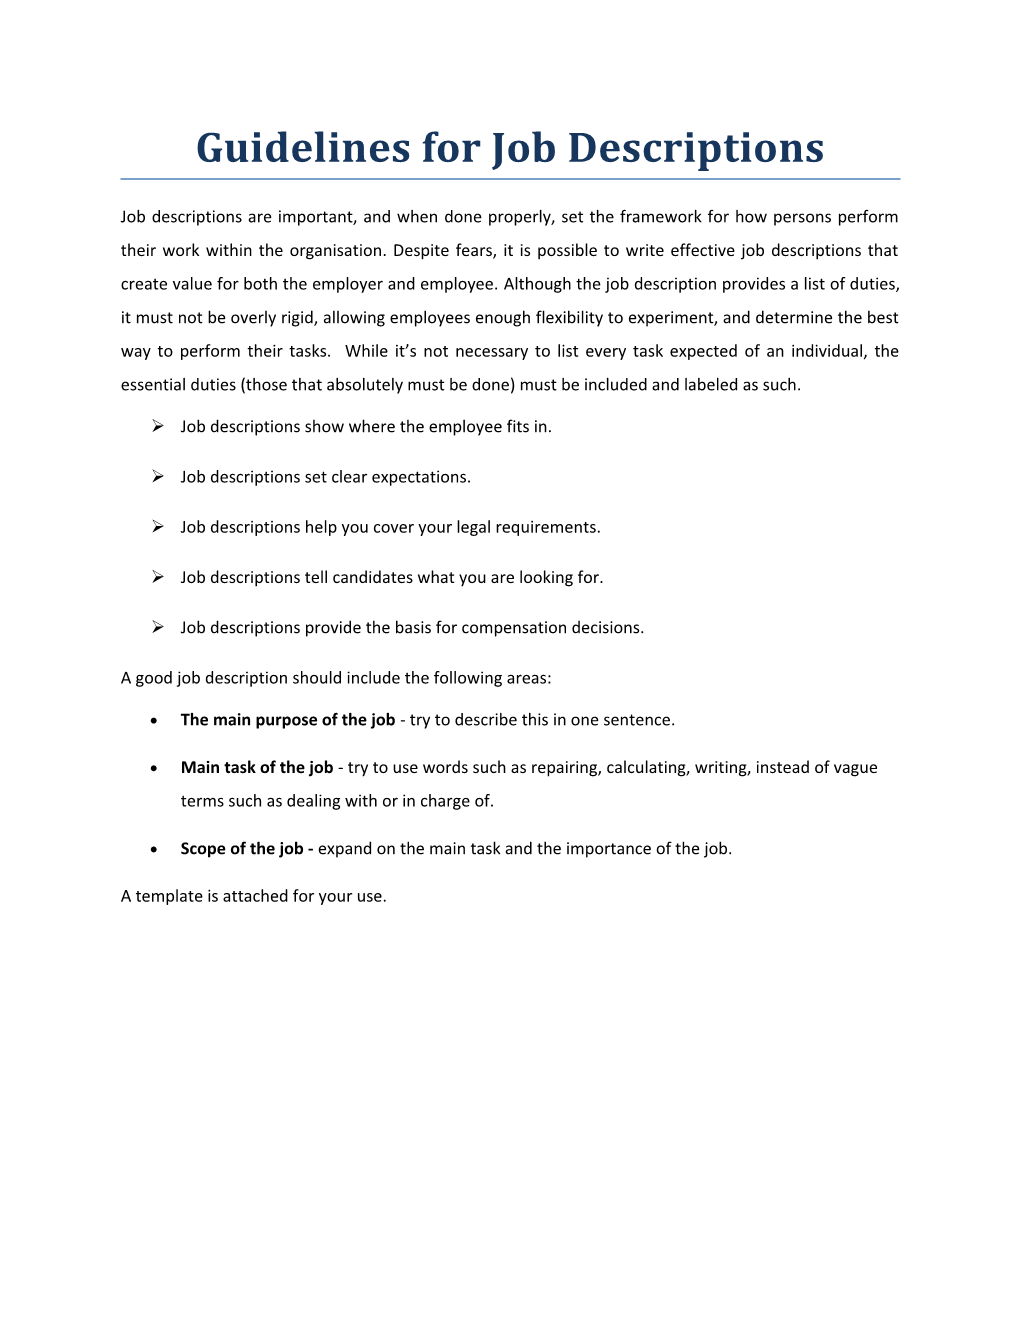 Guidelines for Job Descriptions